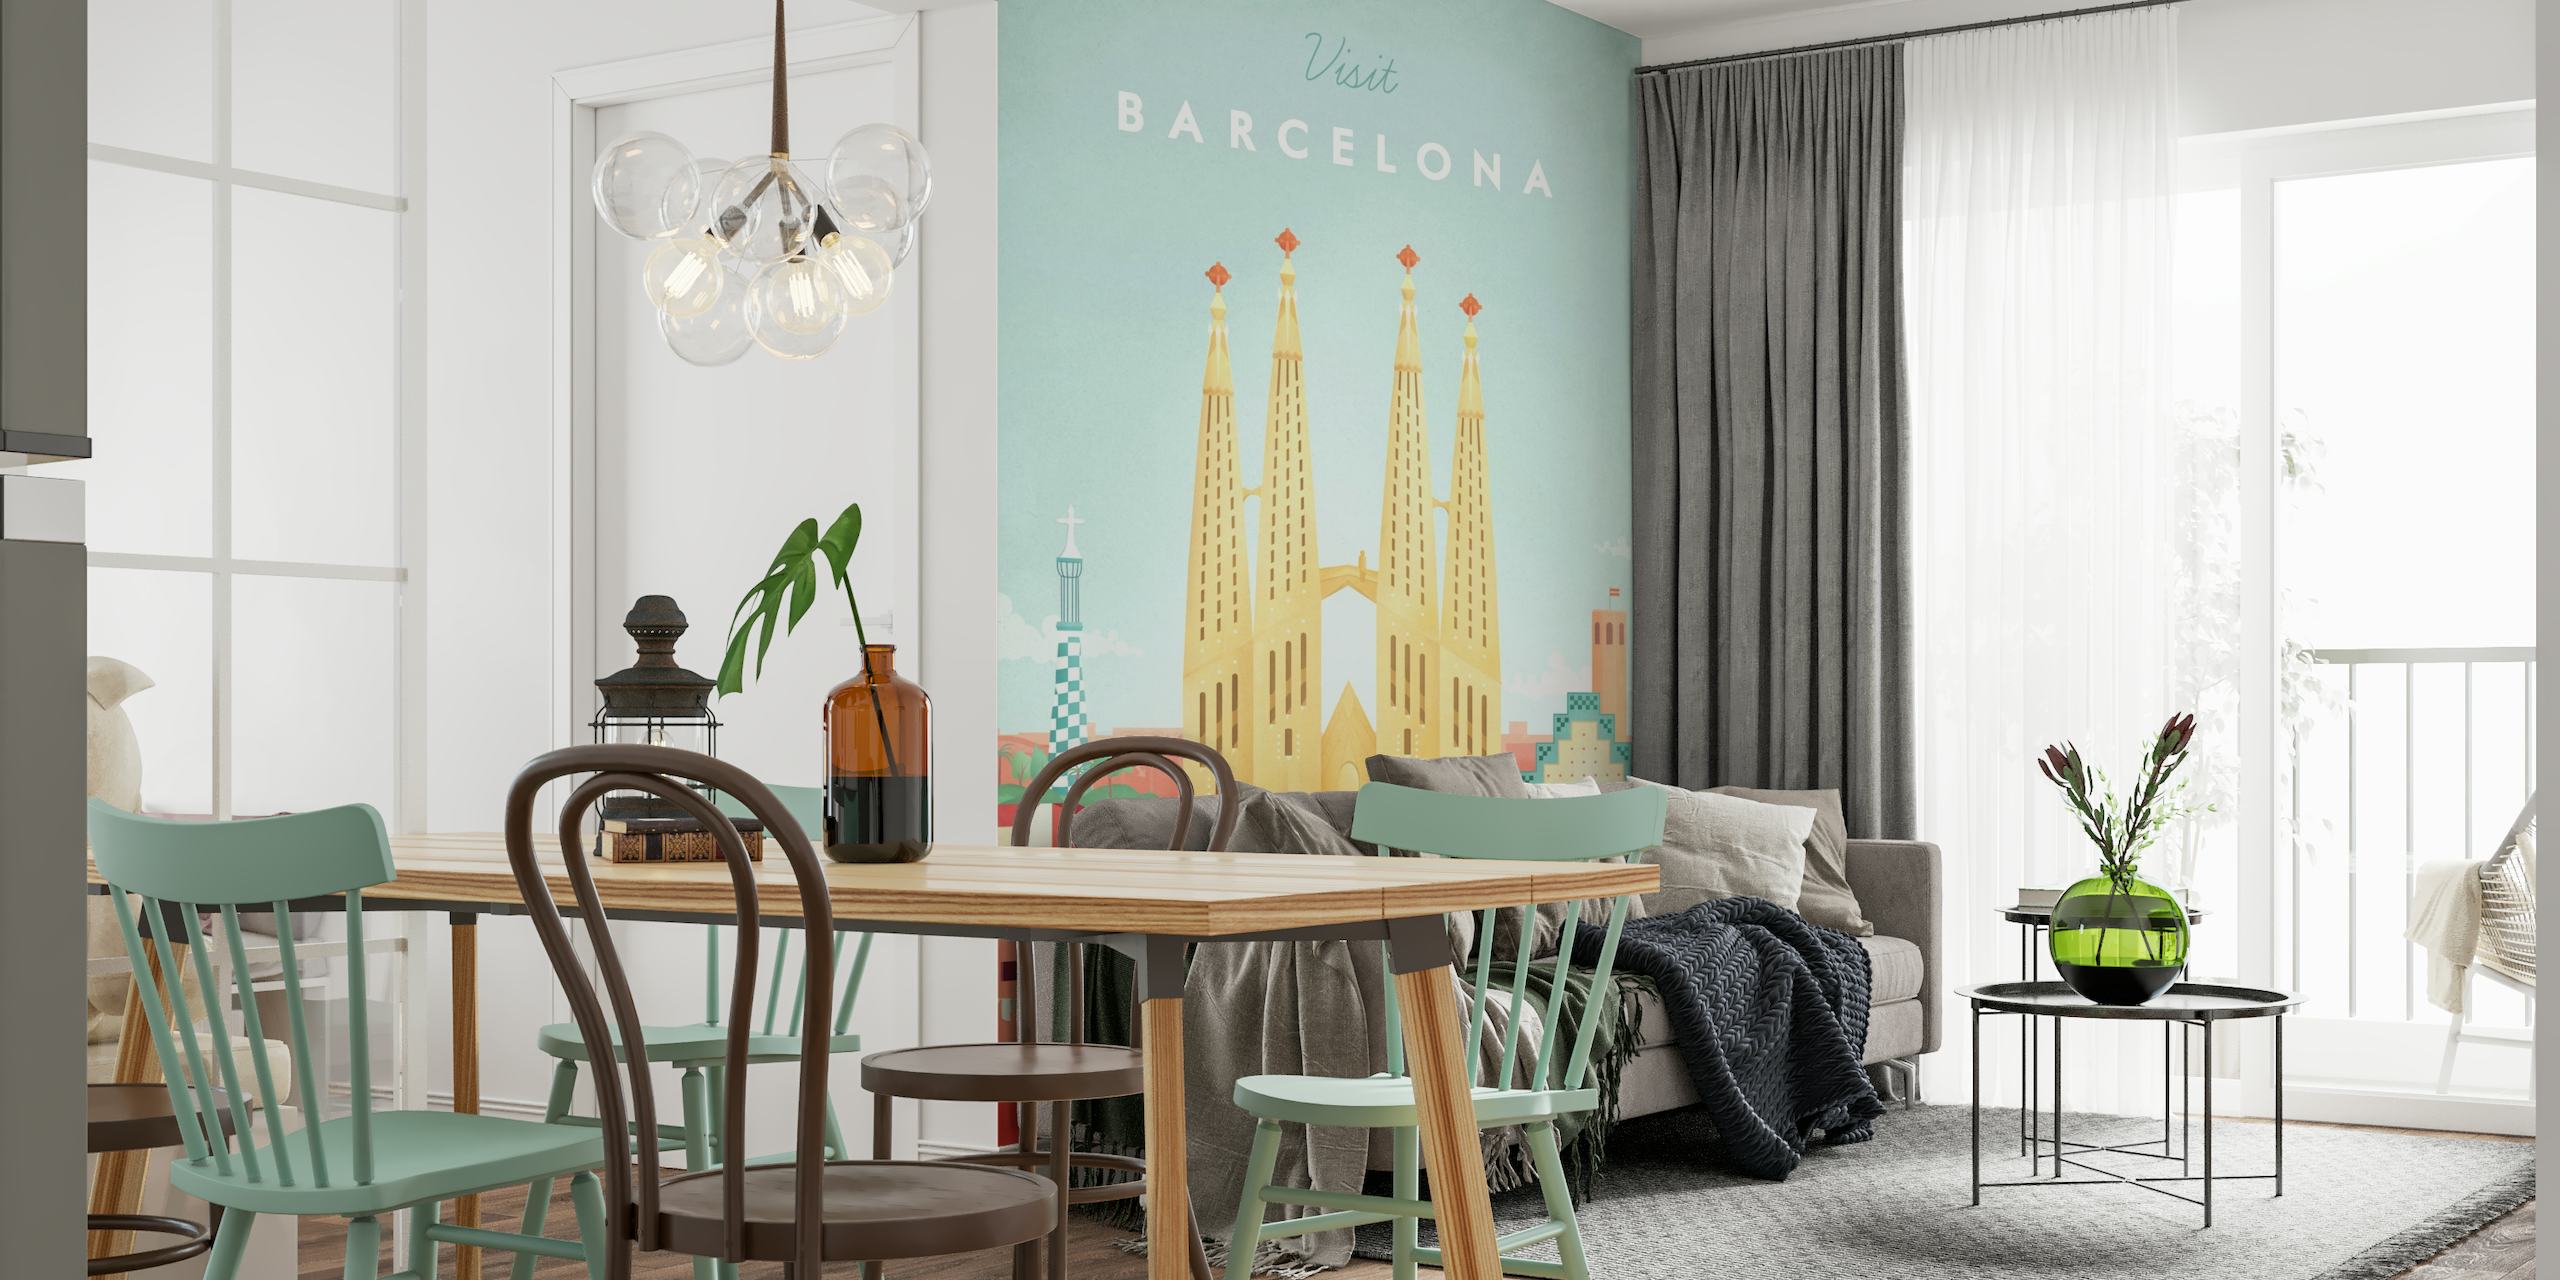 Barcelona Travel Poster ταπετσαρία